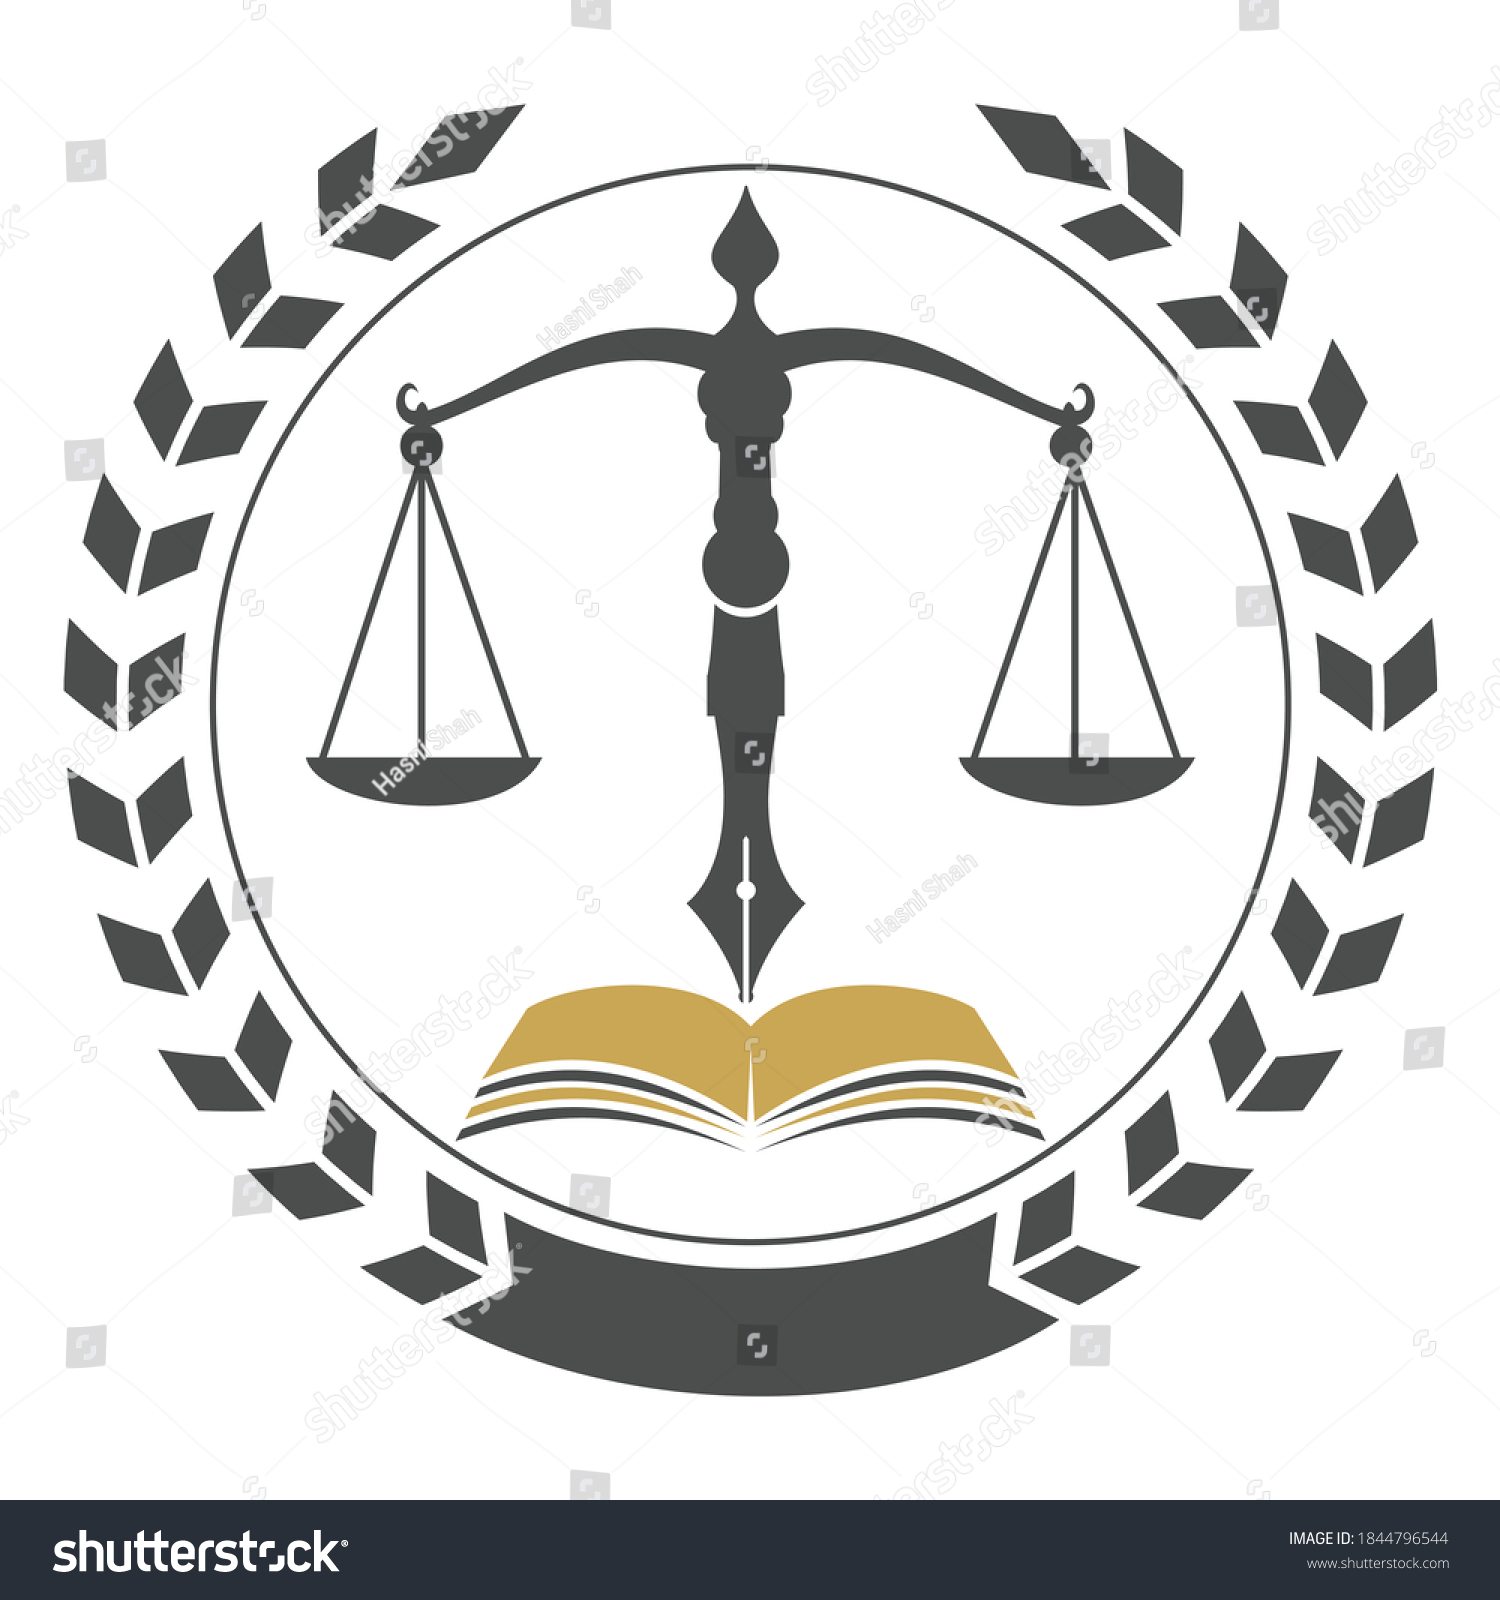 Education Law Balance Attorney Monogram Logo: vetor stock (livre de